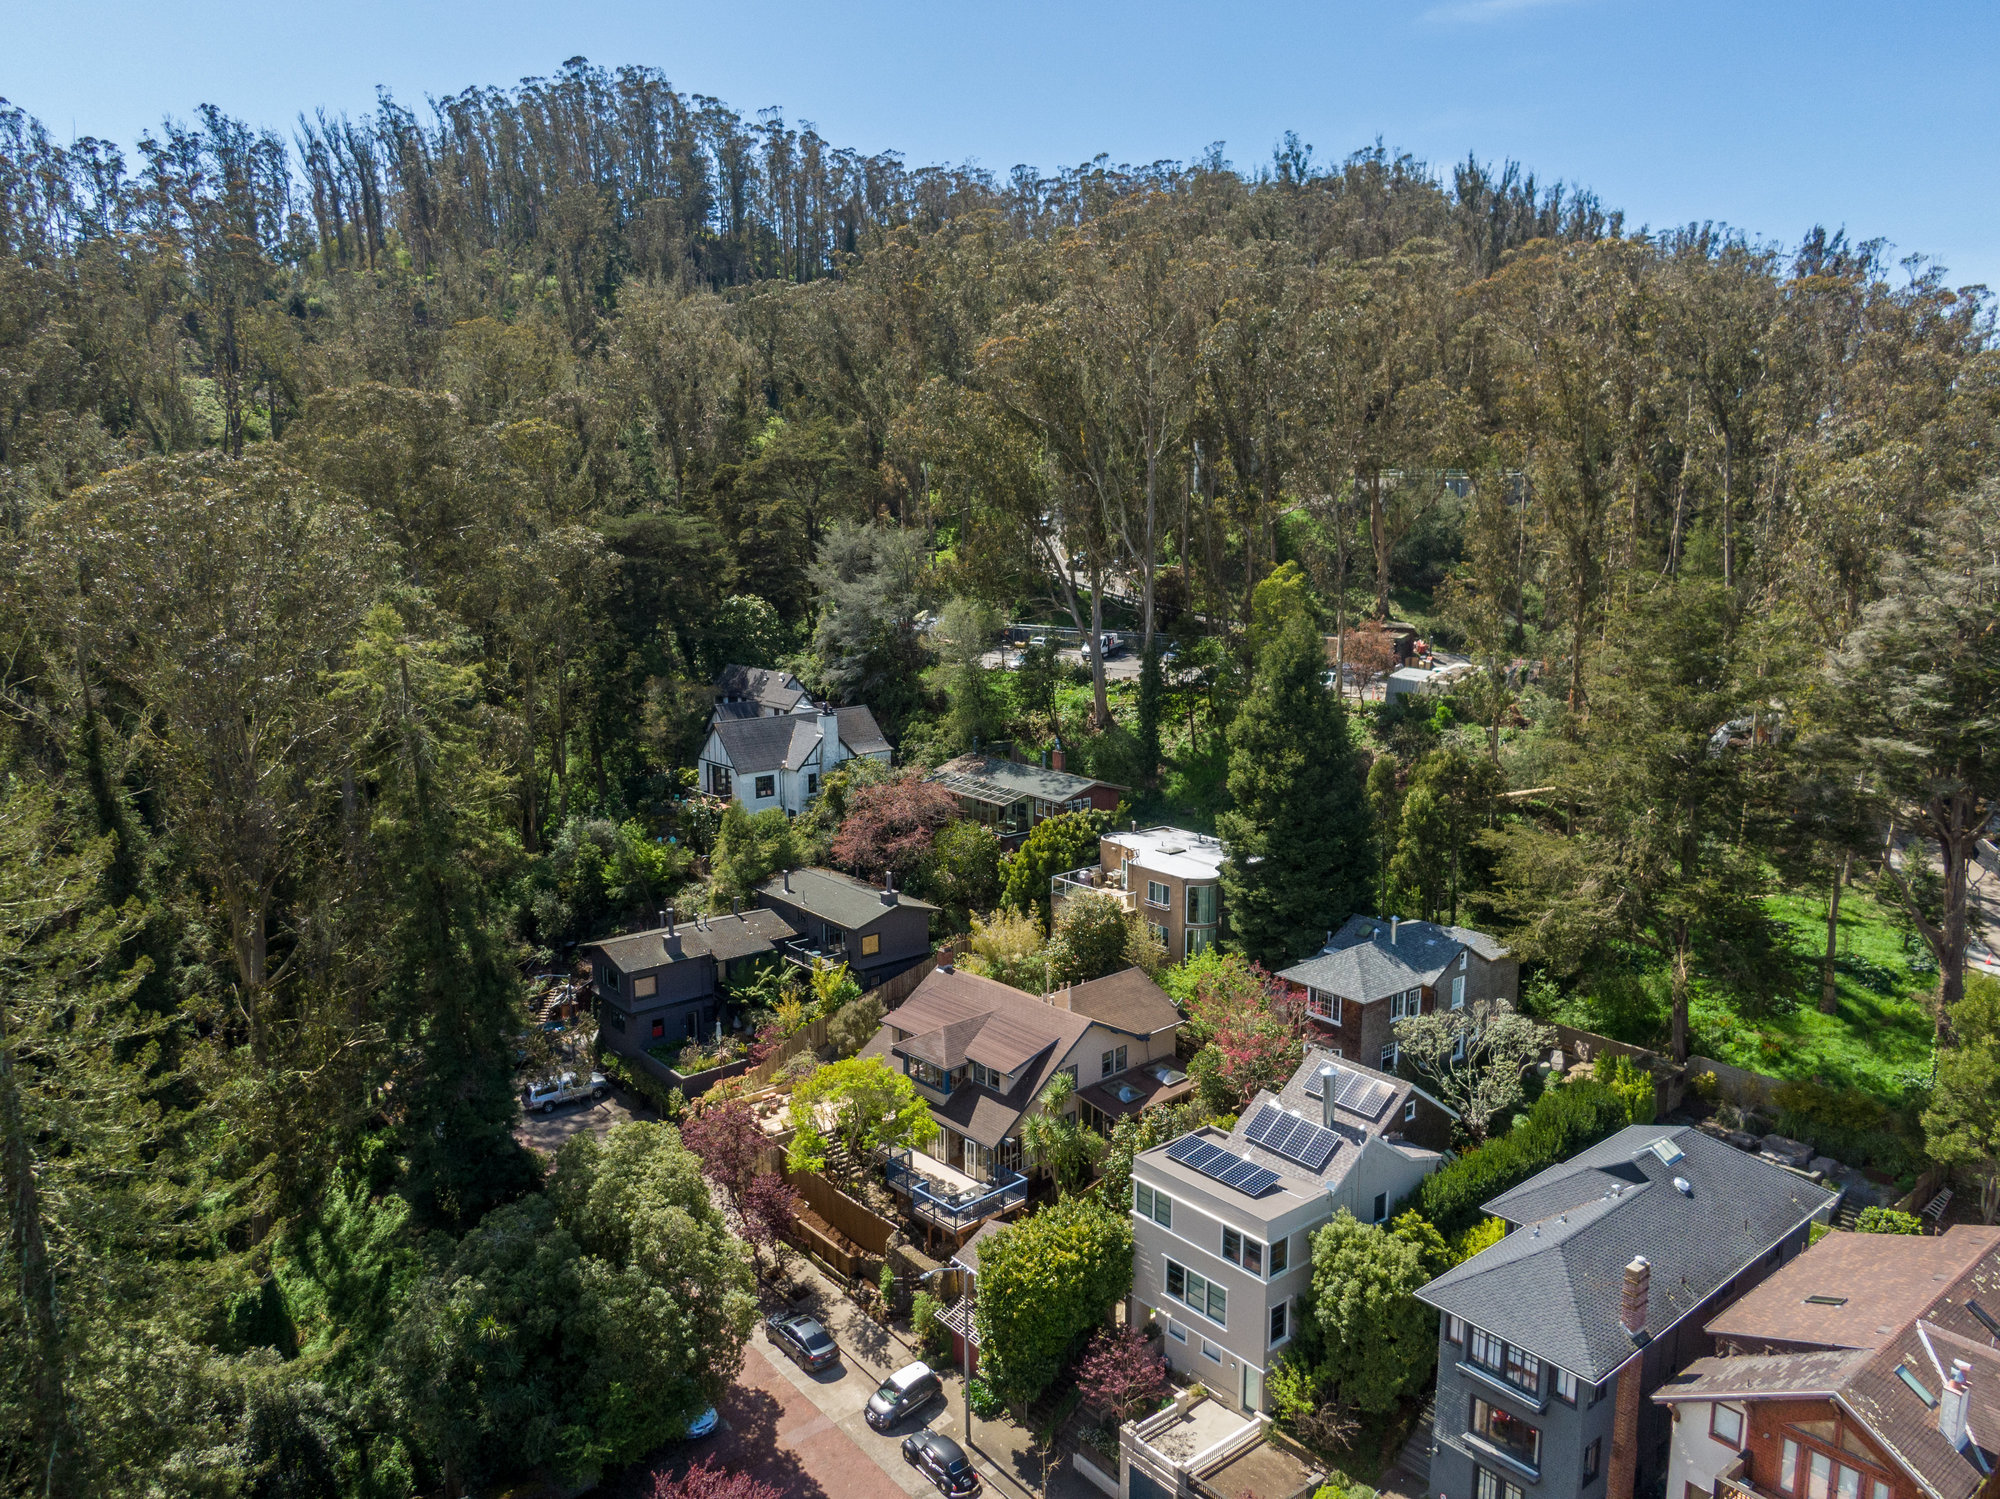 Aerial view of 281 Edgewood Ave, home for sale via John DiDomenico